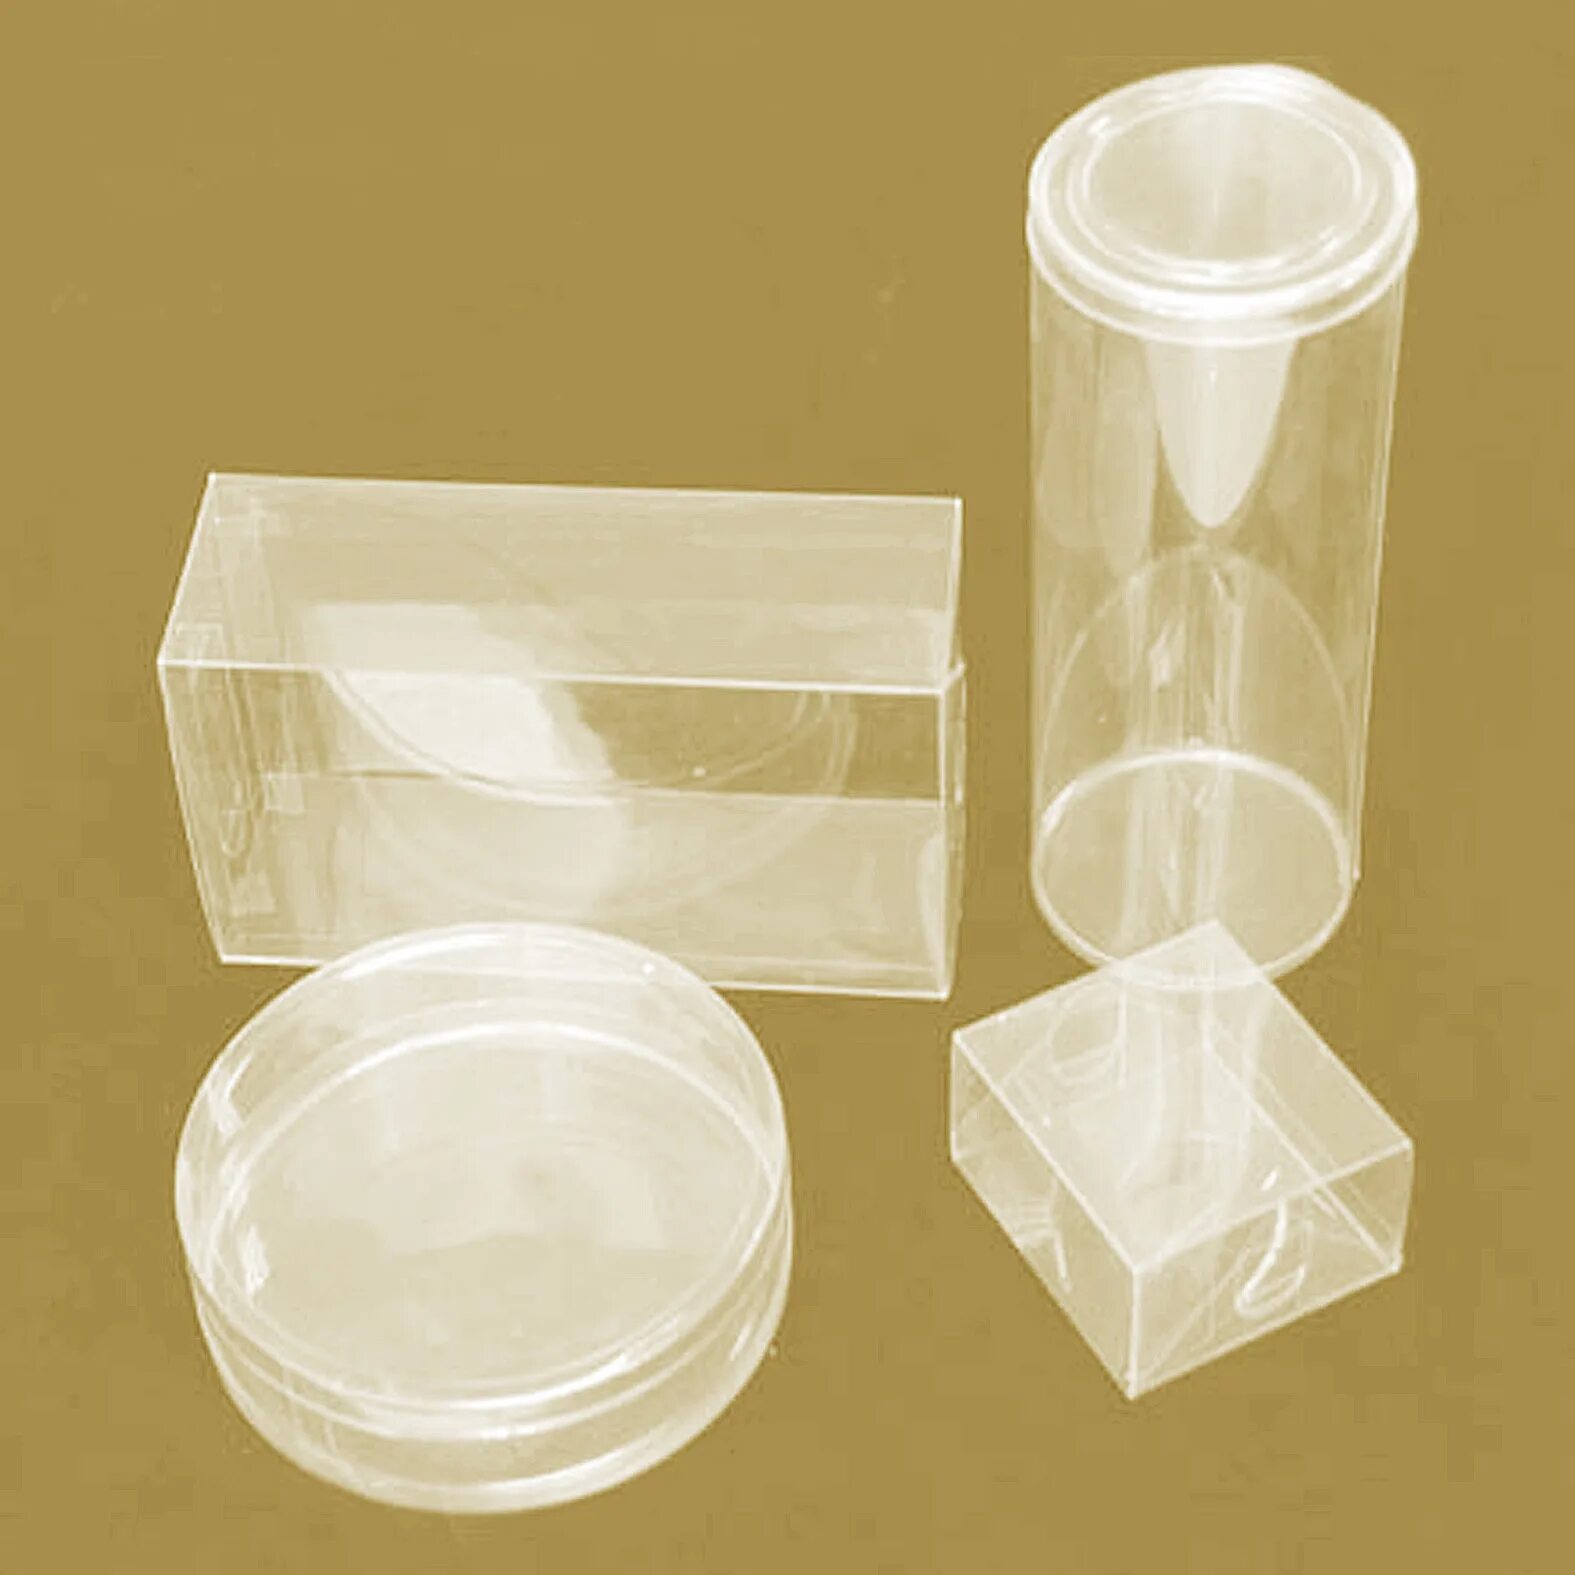 Упак пластик. Упаковка пластиковая прозрачная. Упаковка пластиковая прозрачная коробка. Упаковка из пластика маленькая. Упаковка из ПЭТ пластика.